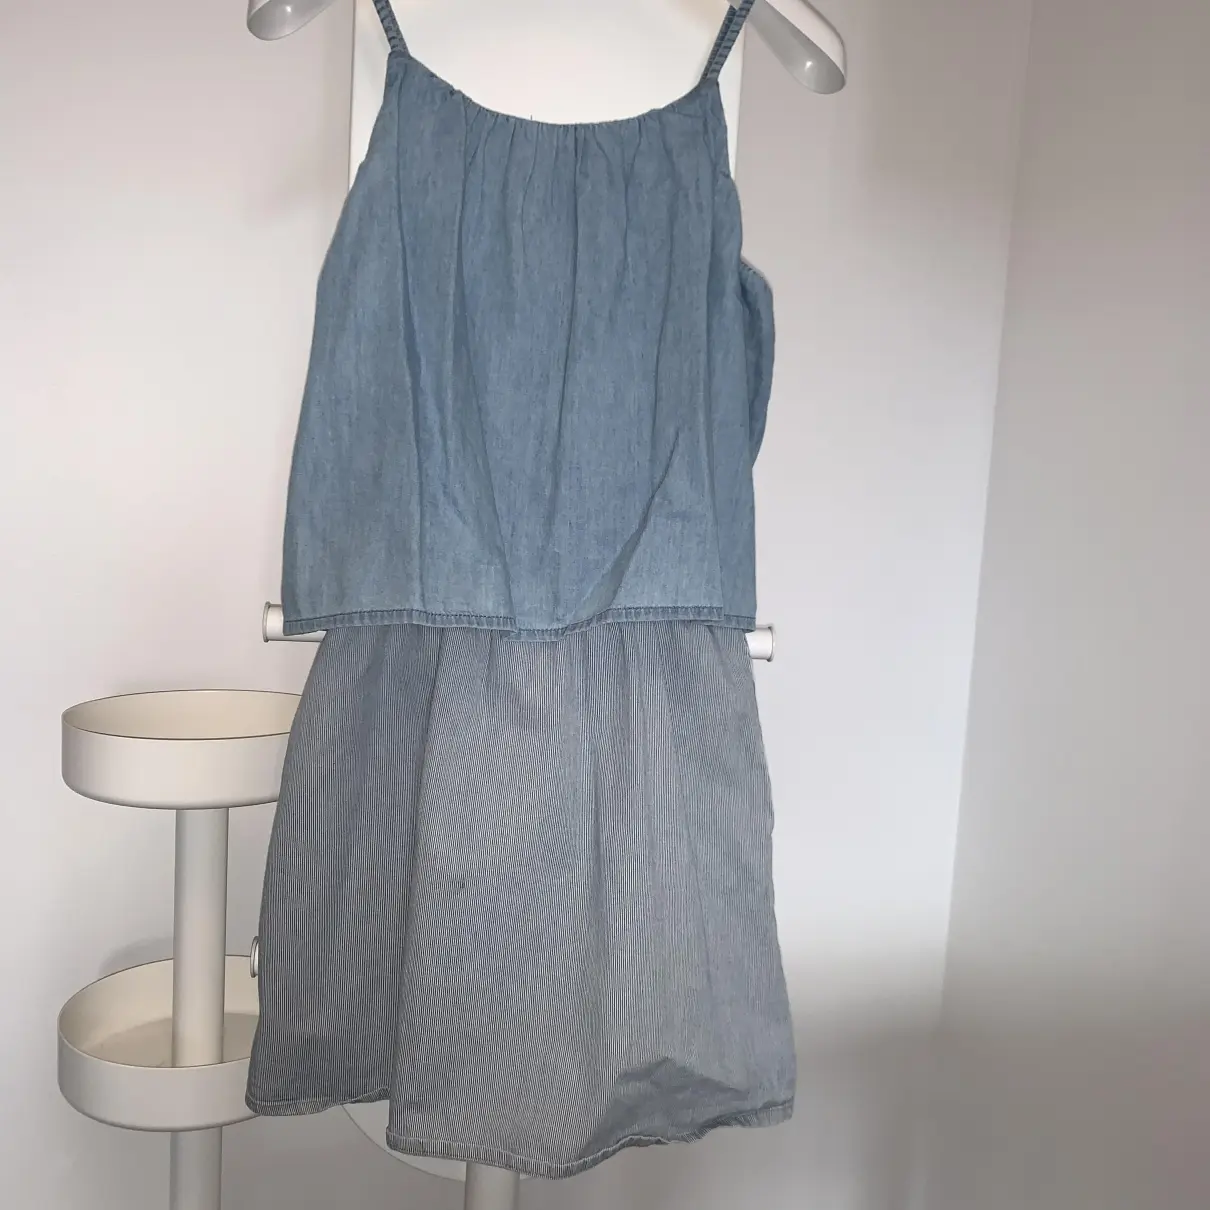 Chloé Mini dress for sale